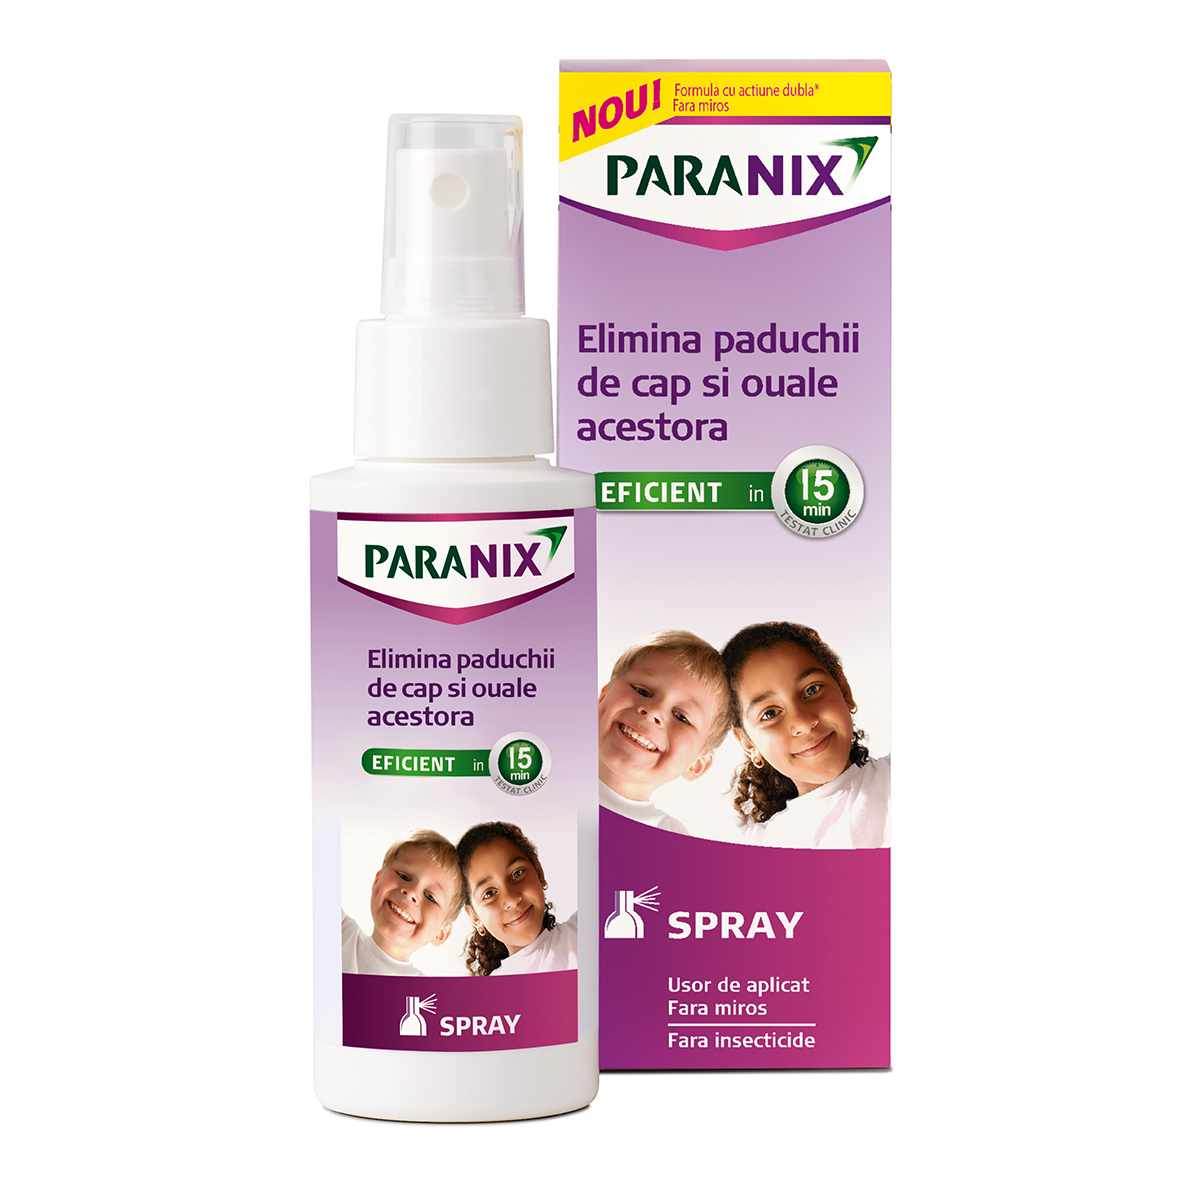 Protectie anti-insecte - Spray Paranix antipaduchi, 100 ml, Perrigo, sinapis.ro